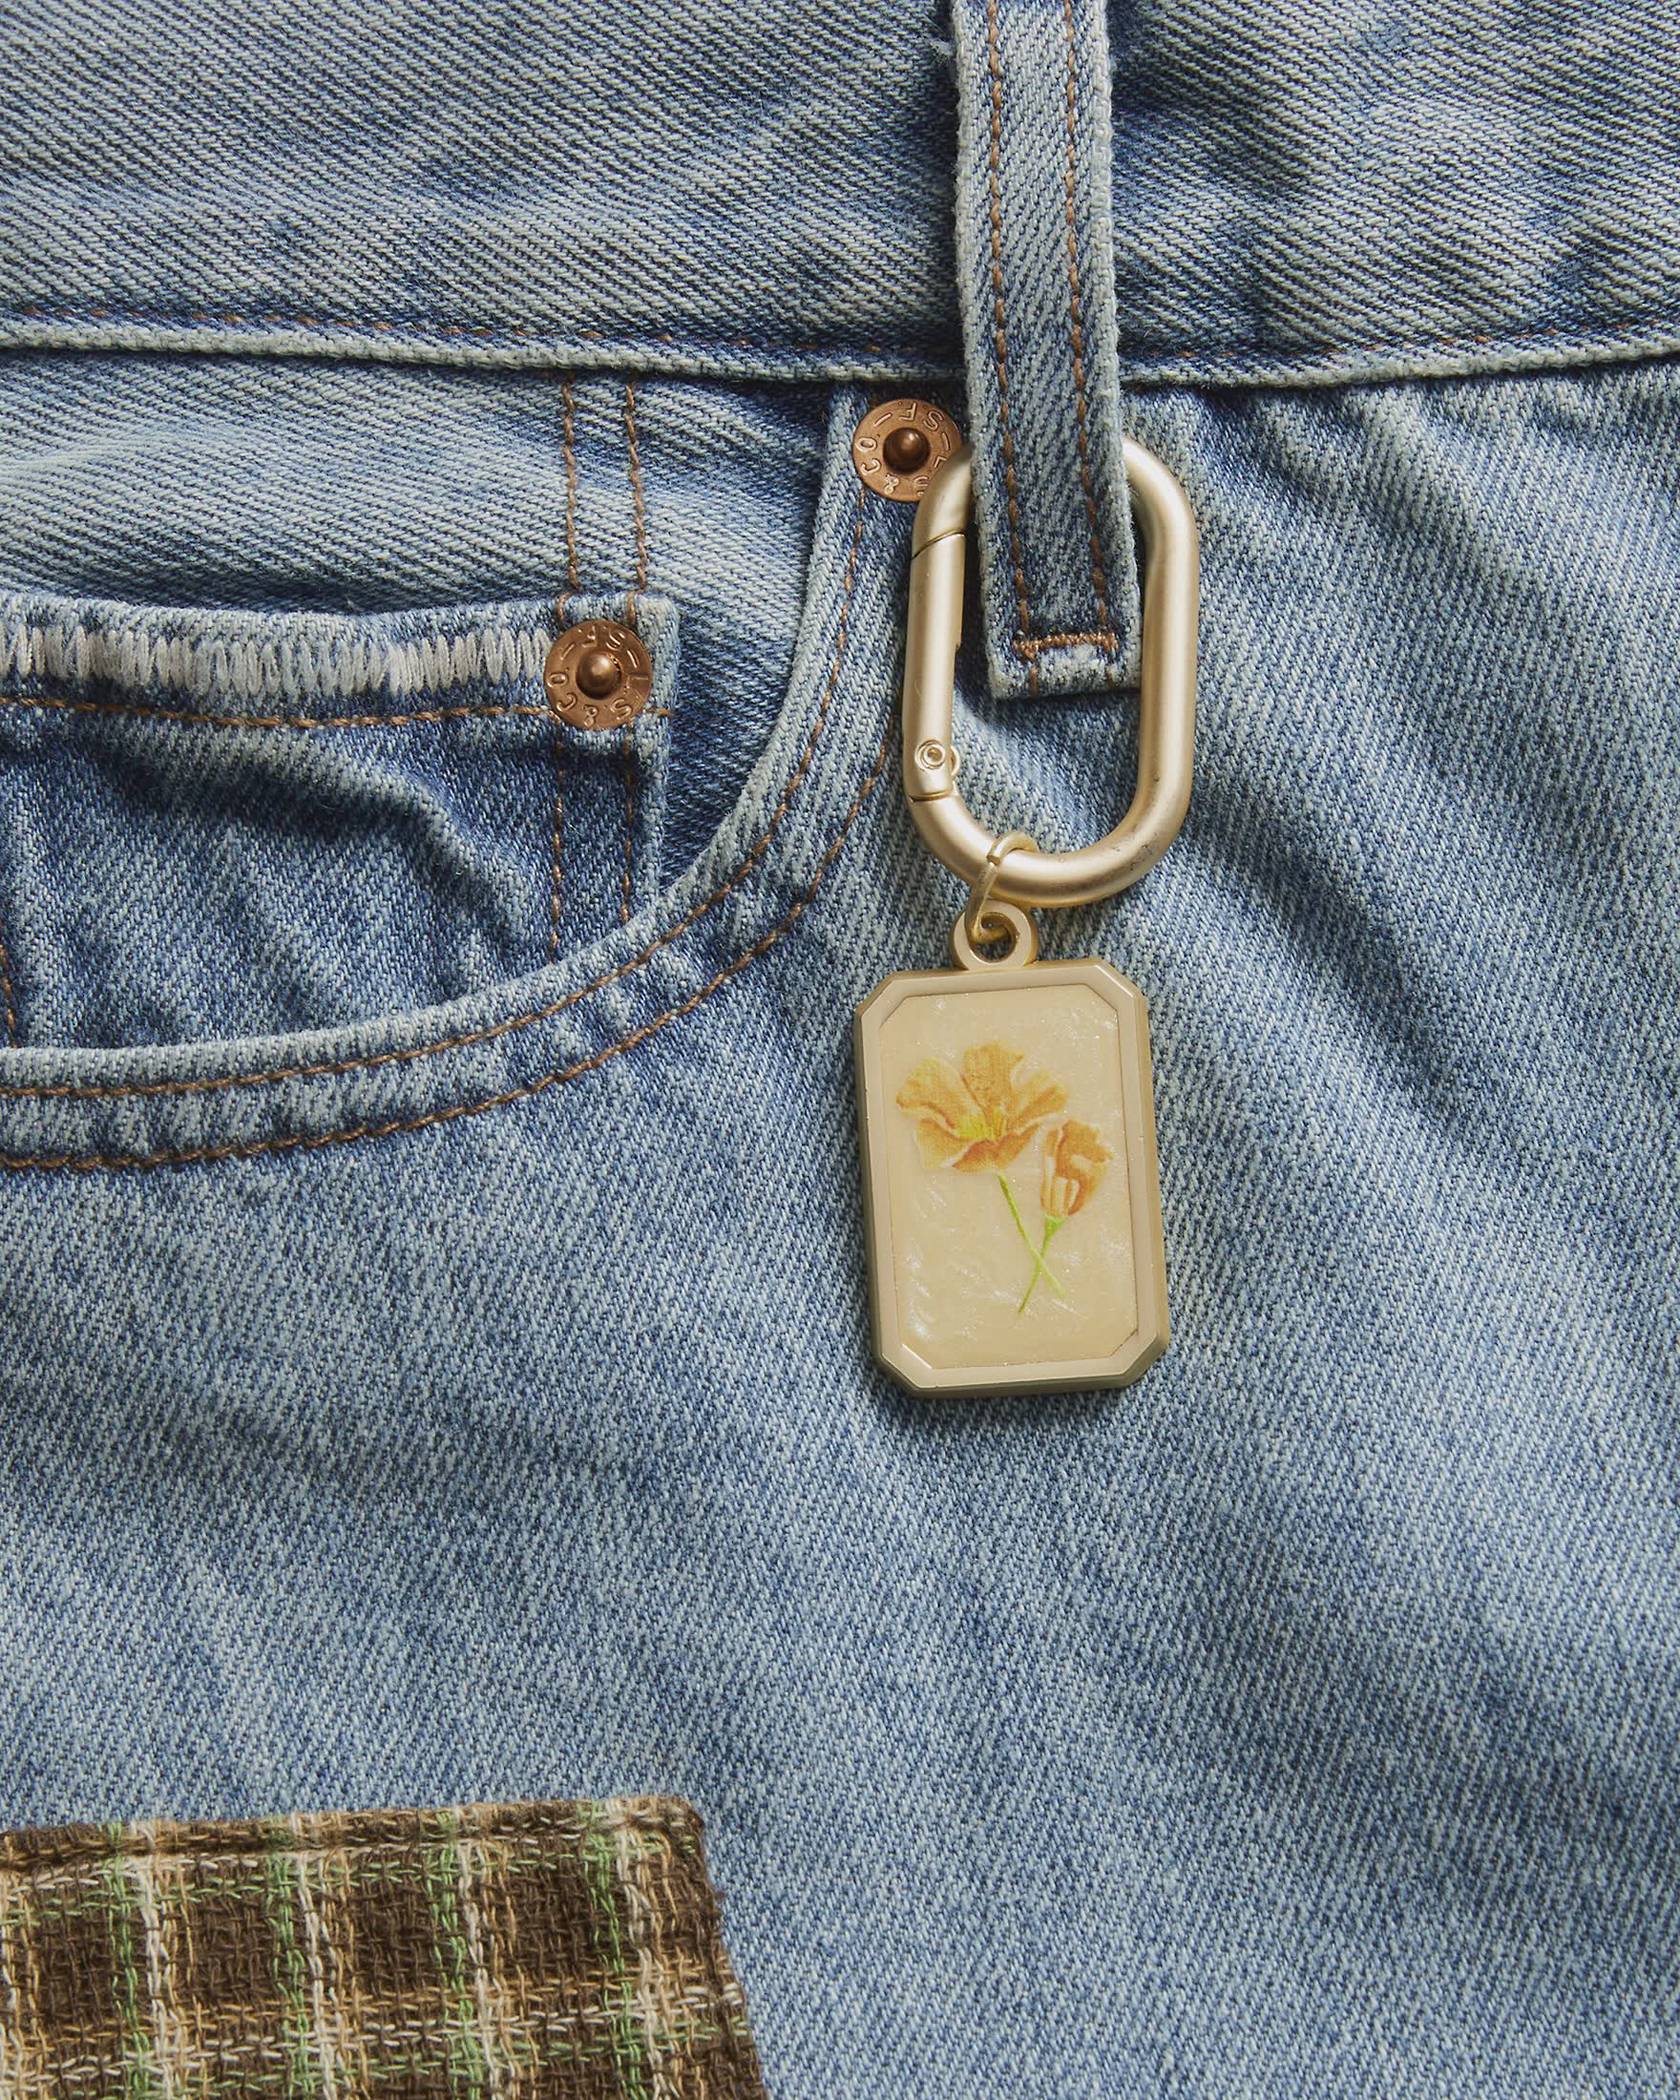 Closeup image detailing the pocket of the Levi's® x Emma Chamberlain collaboration 